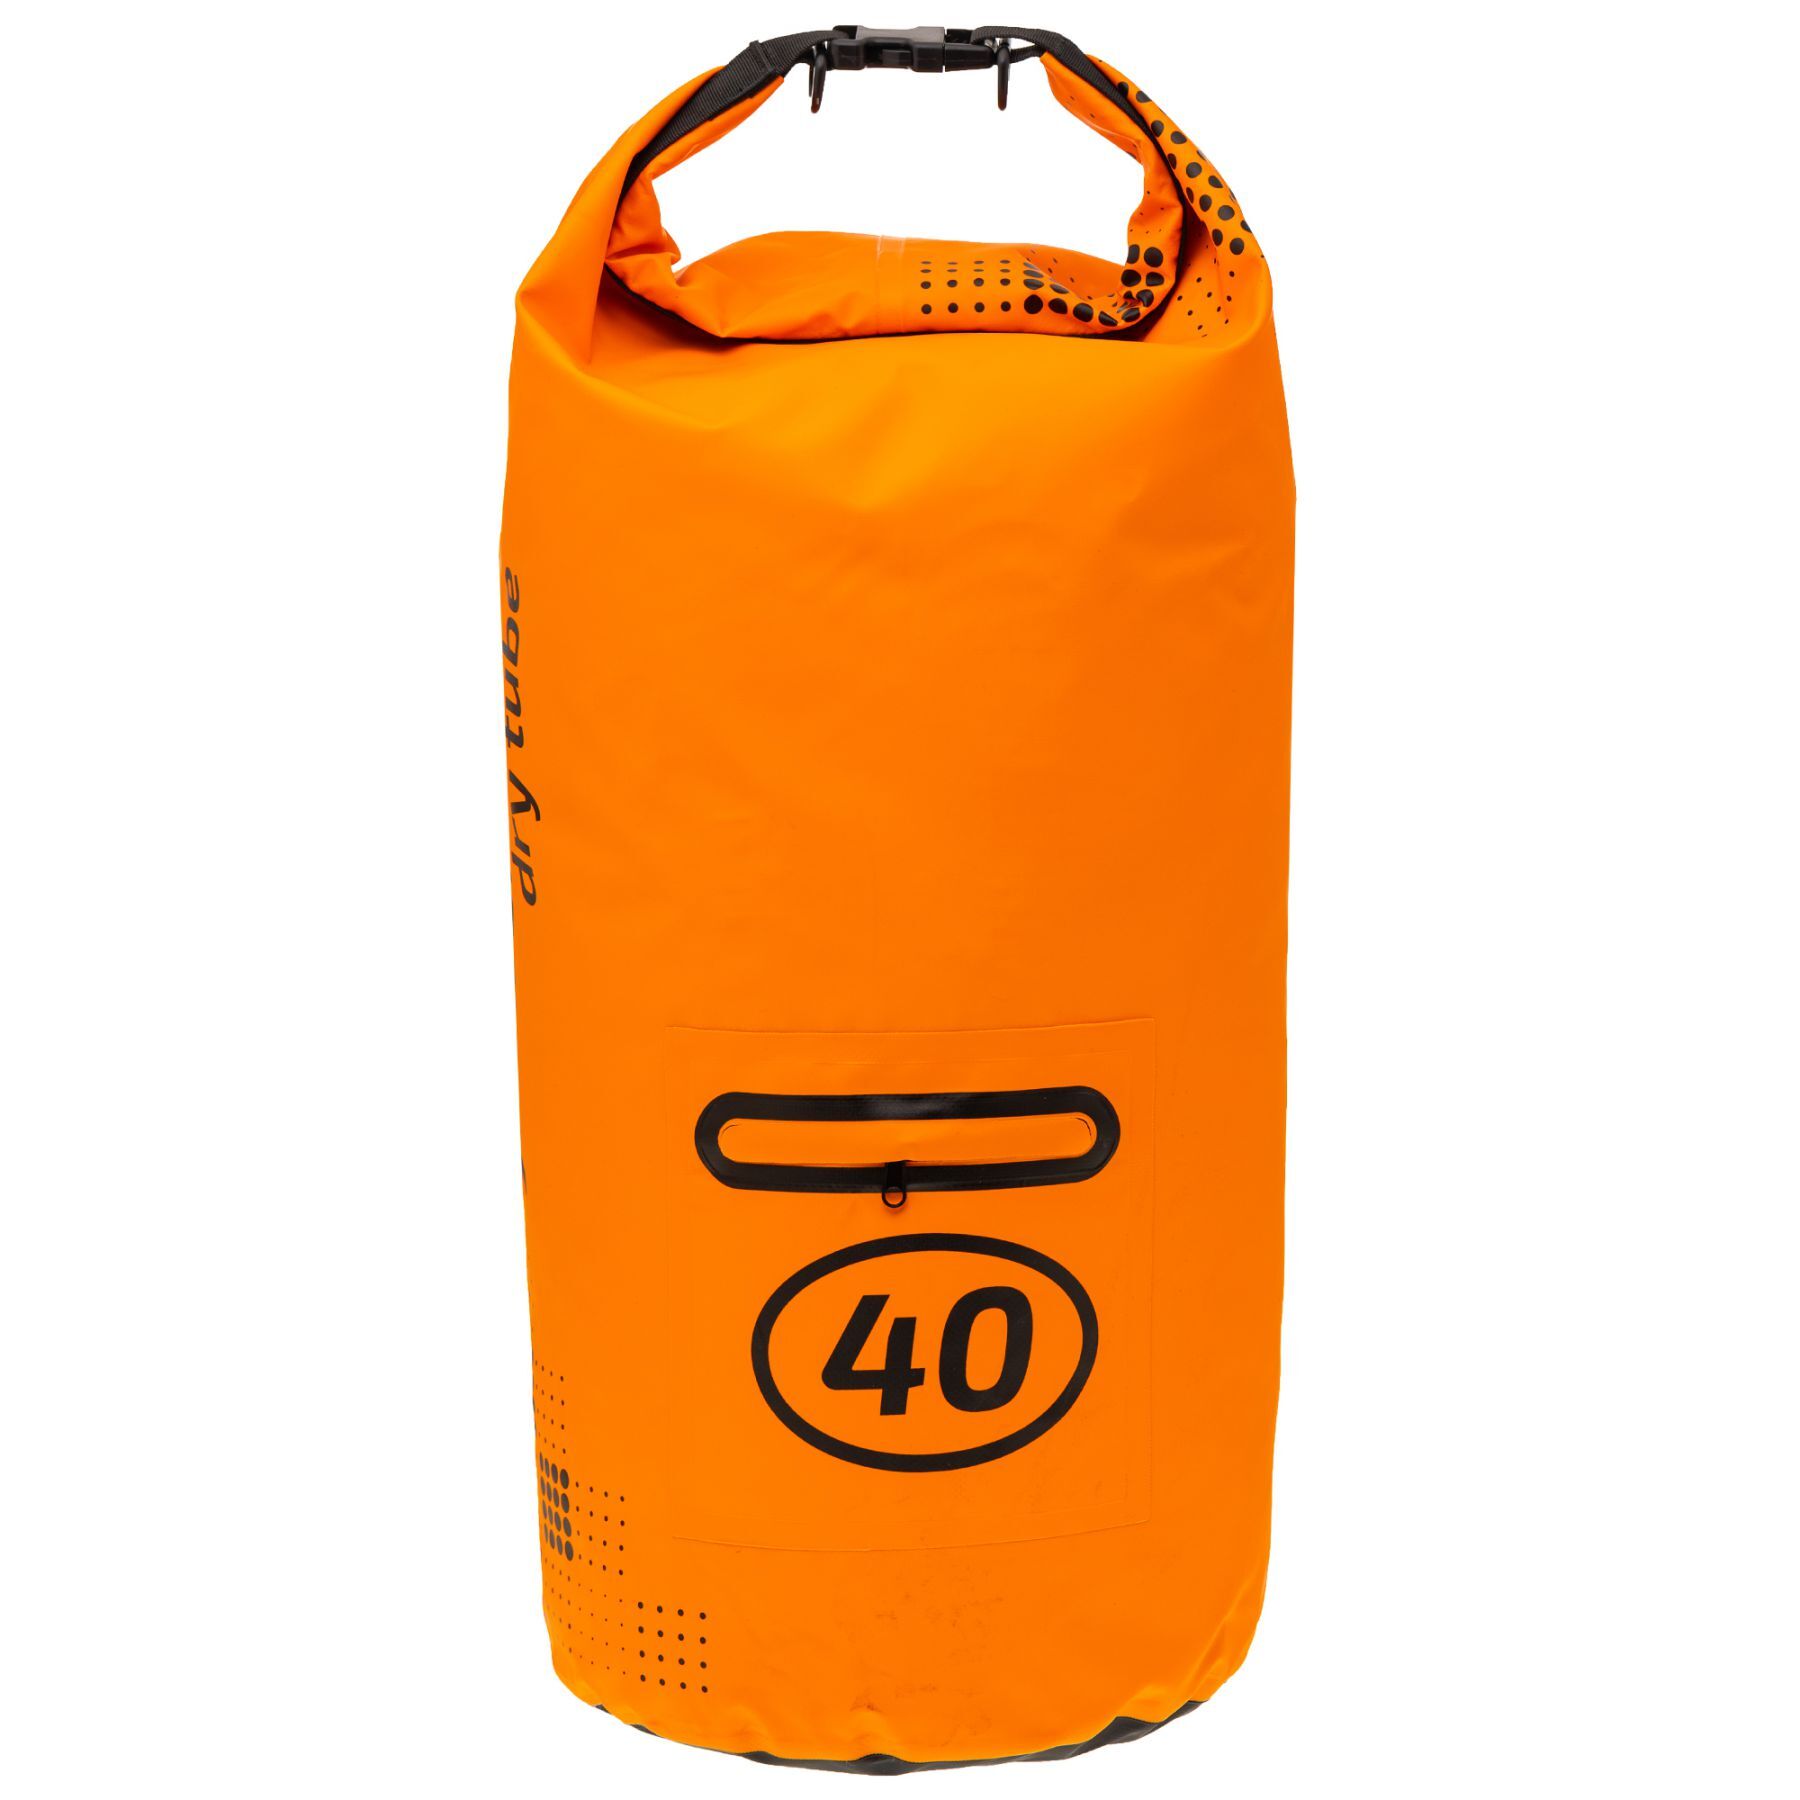 Гермобаул. Гермомешок 40л. Гермомешок 40 литров оранжевый с лямкой и карманом Marlin Dry tube 40 l. Гермомешок Вольный ветер 80 л. Гермобаул 120 литров.